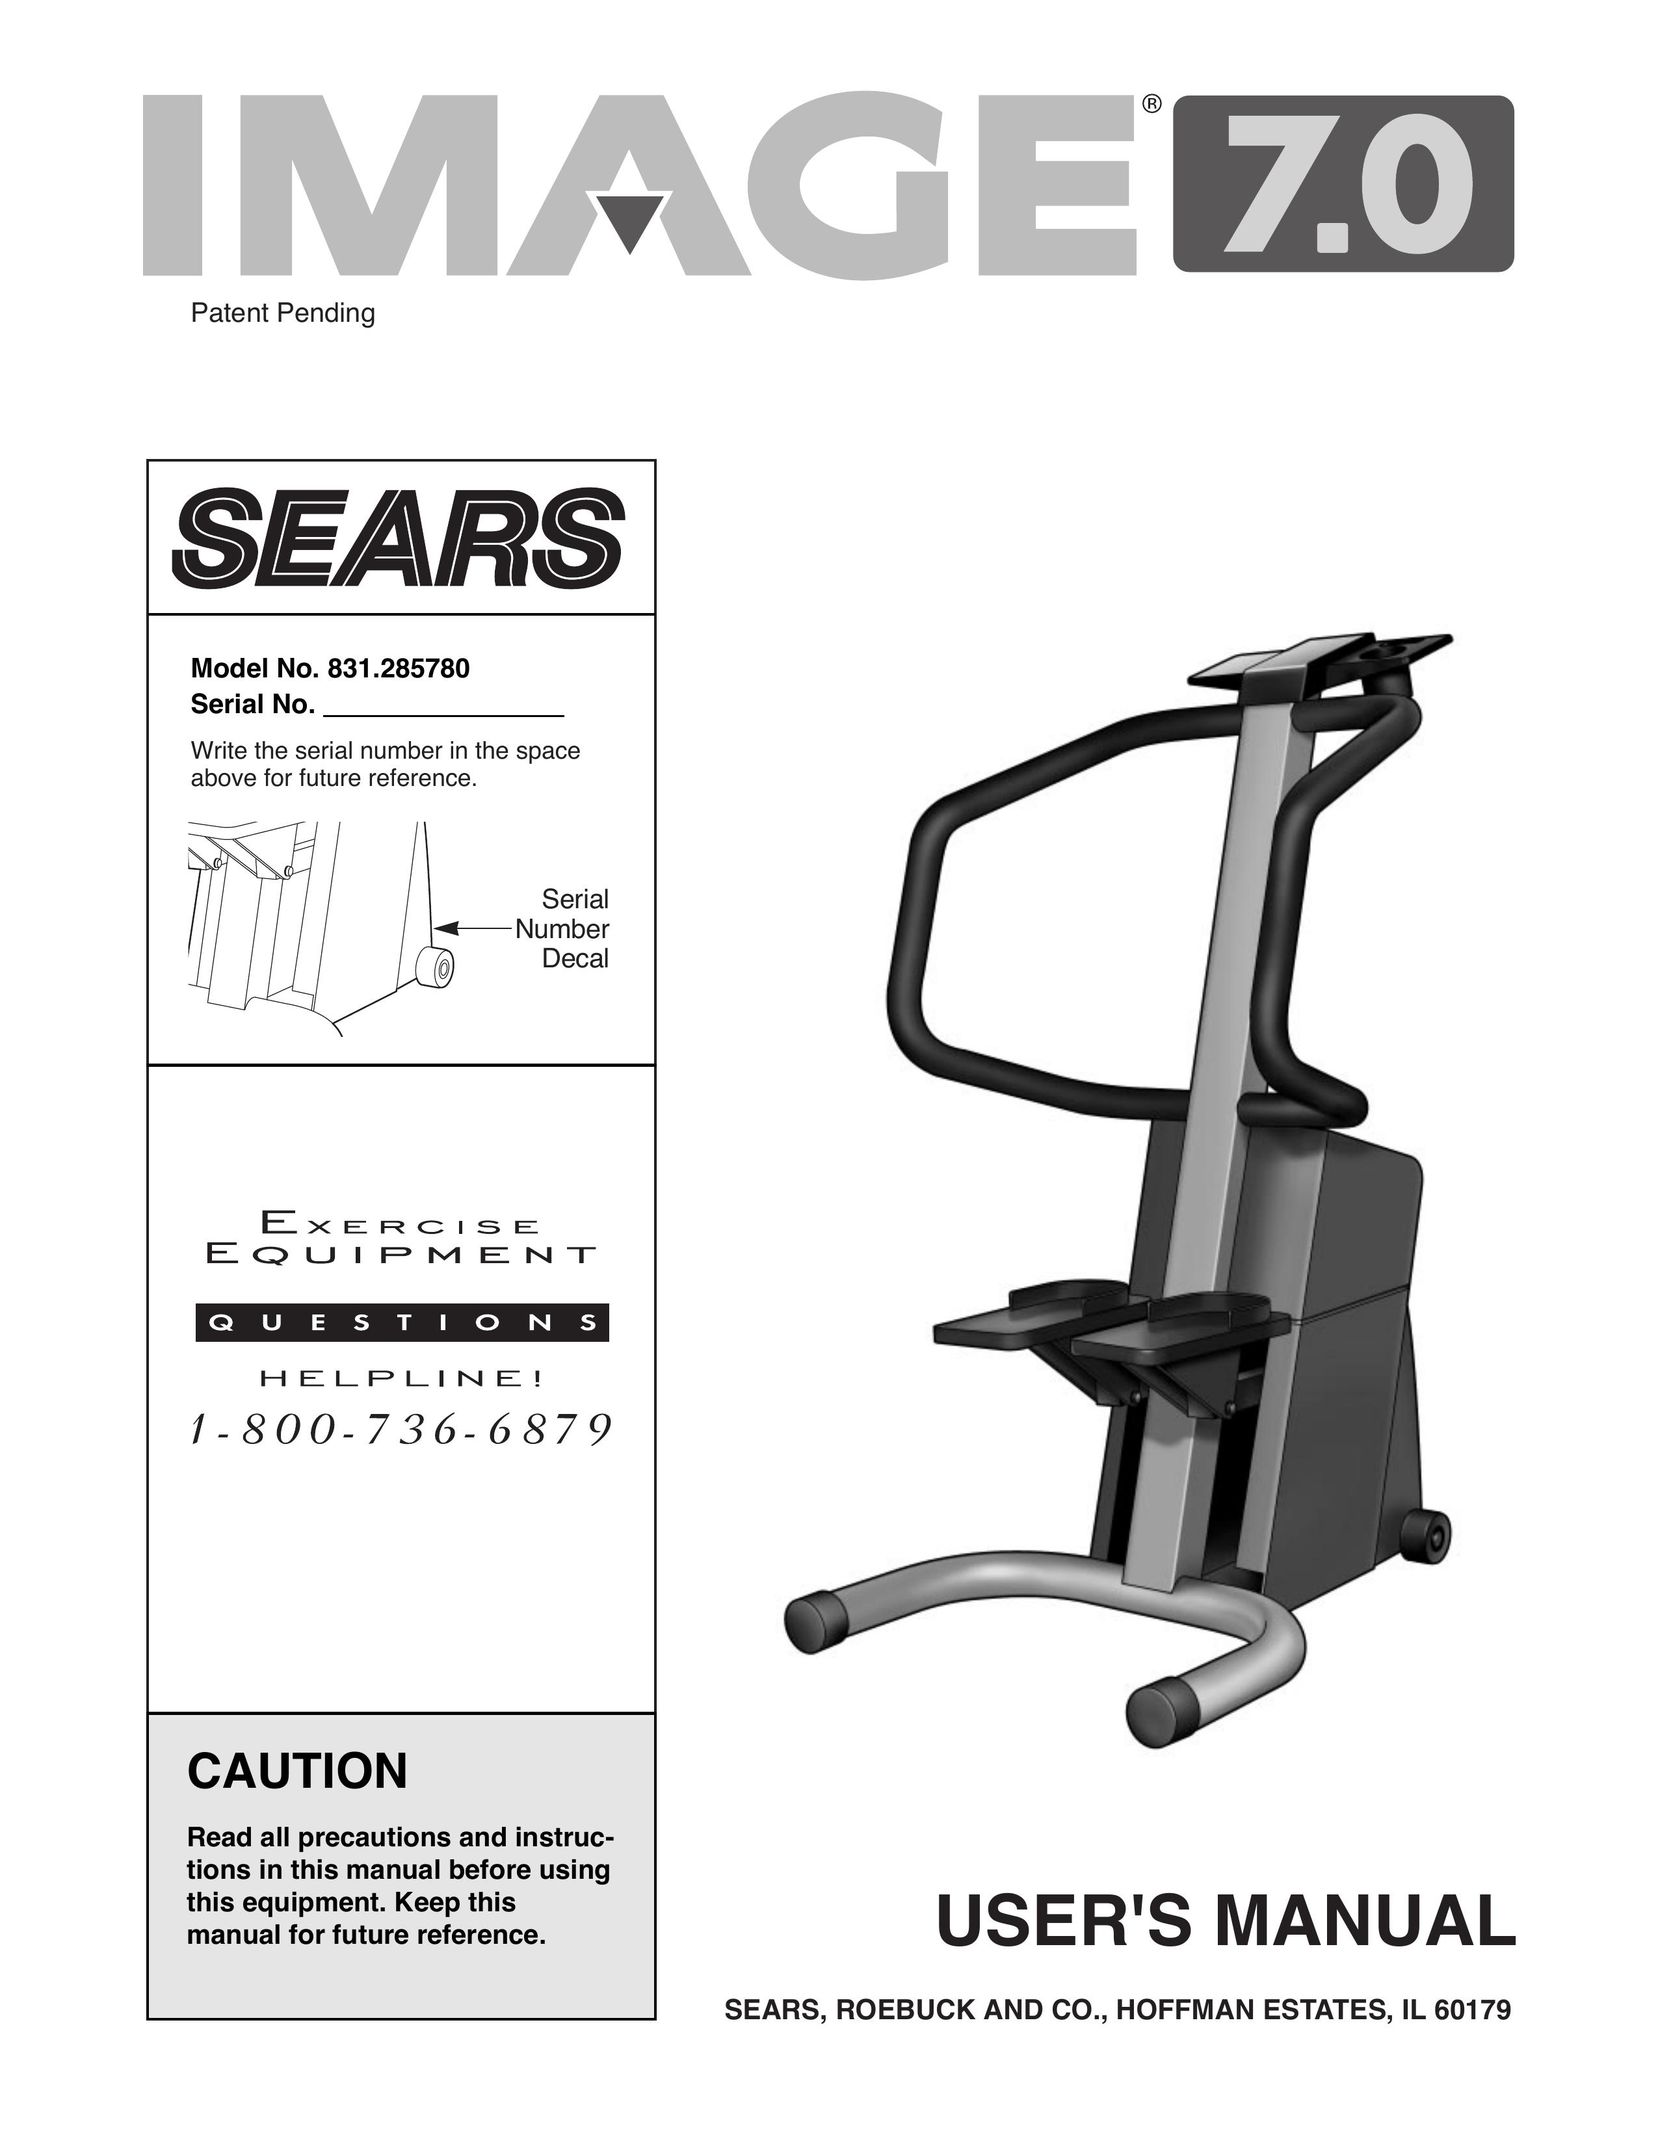 Sears 831.285780 Home Gym User Manual